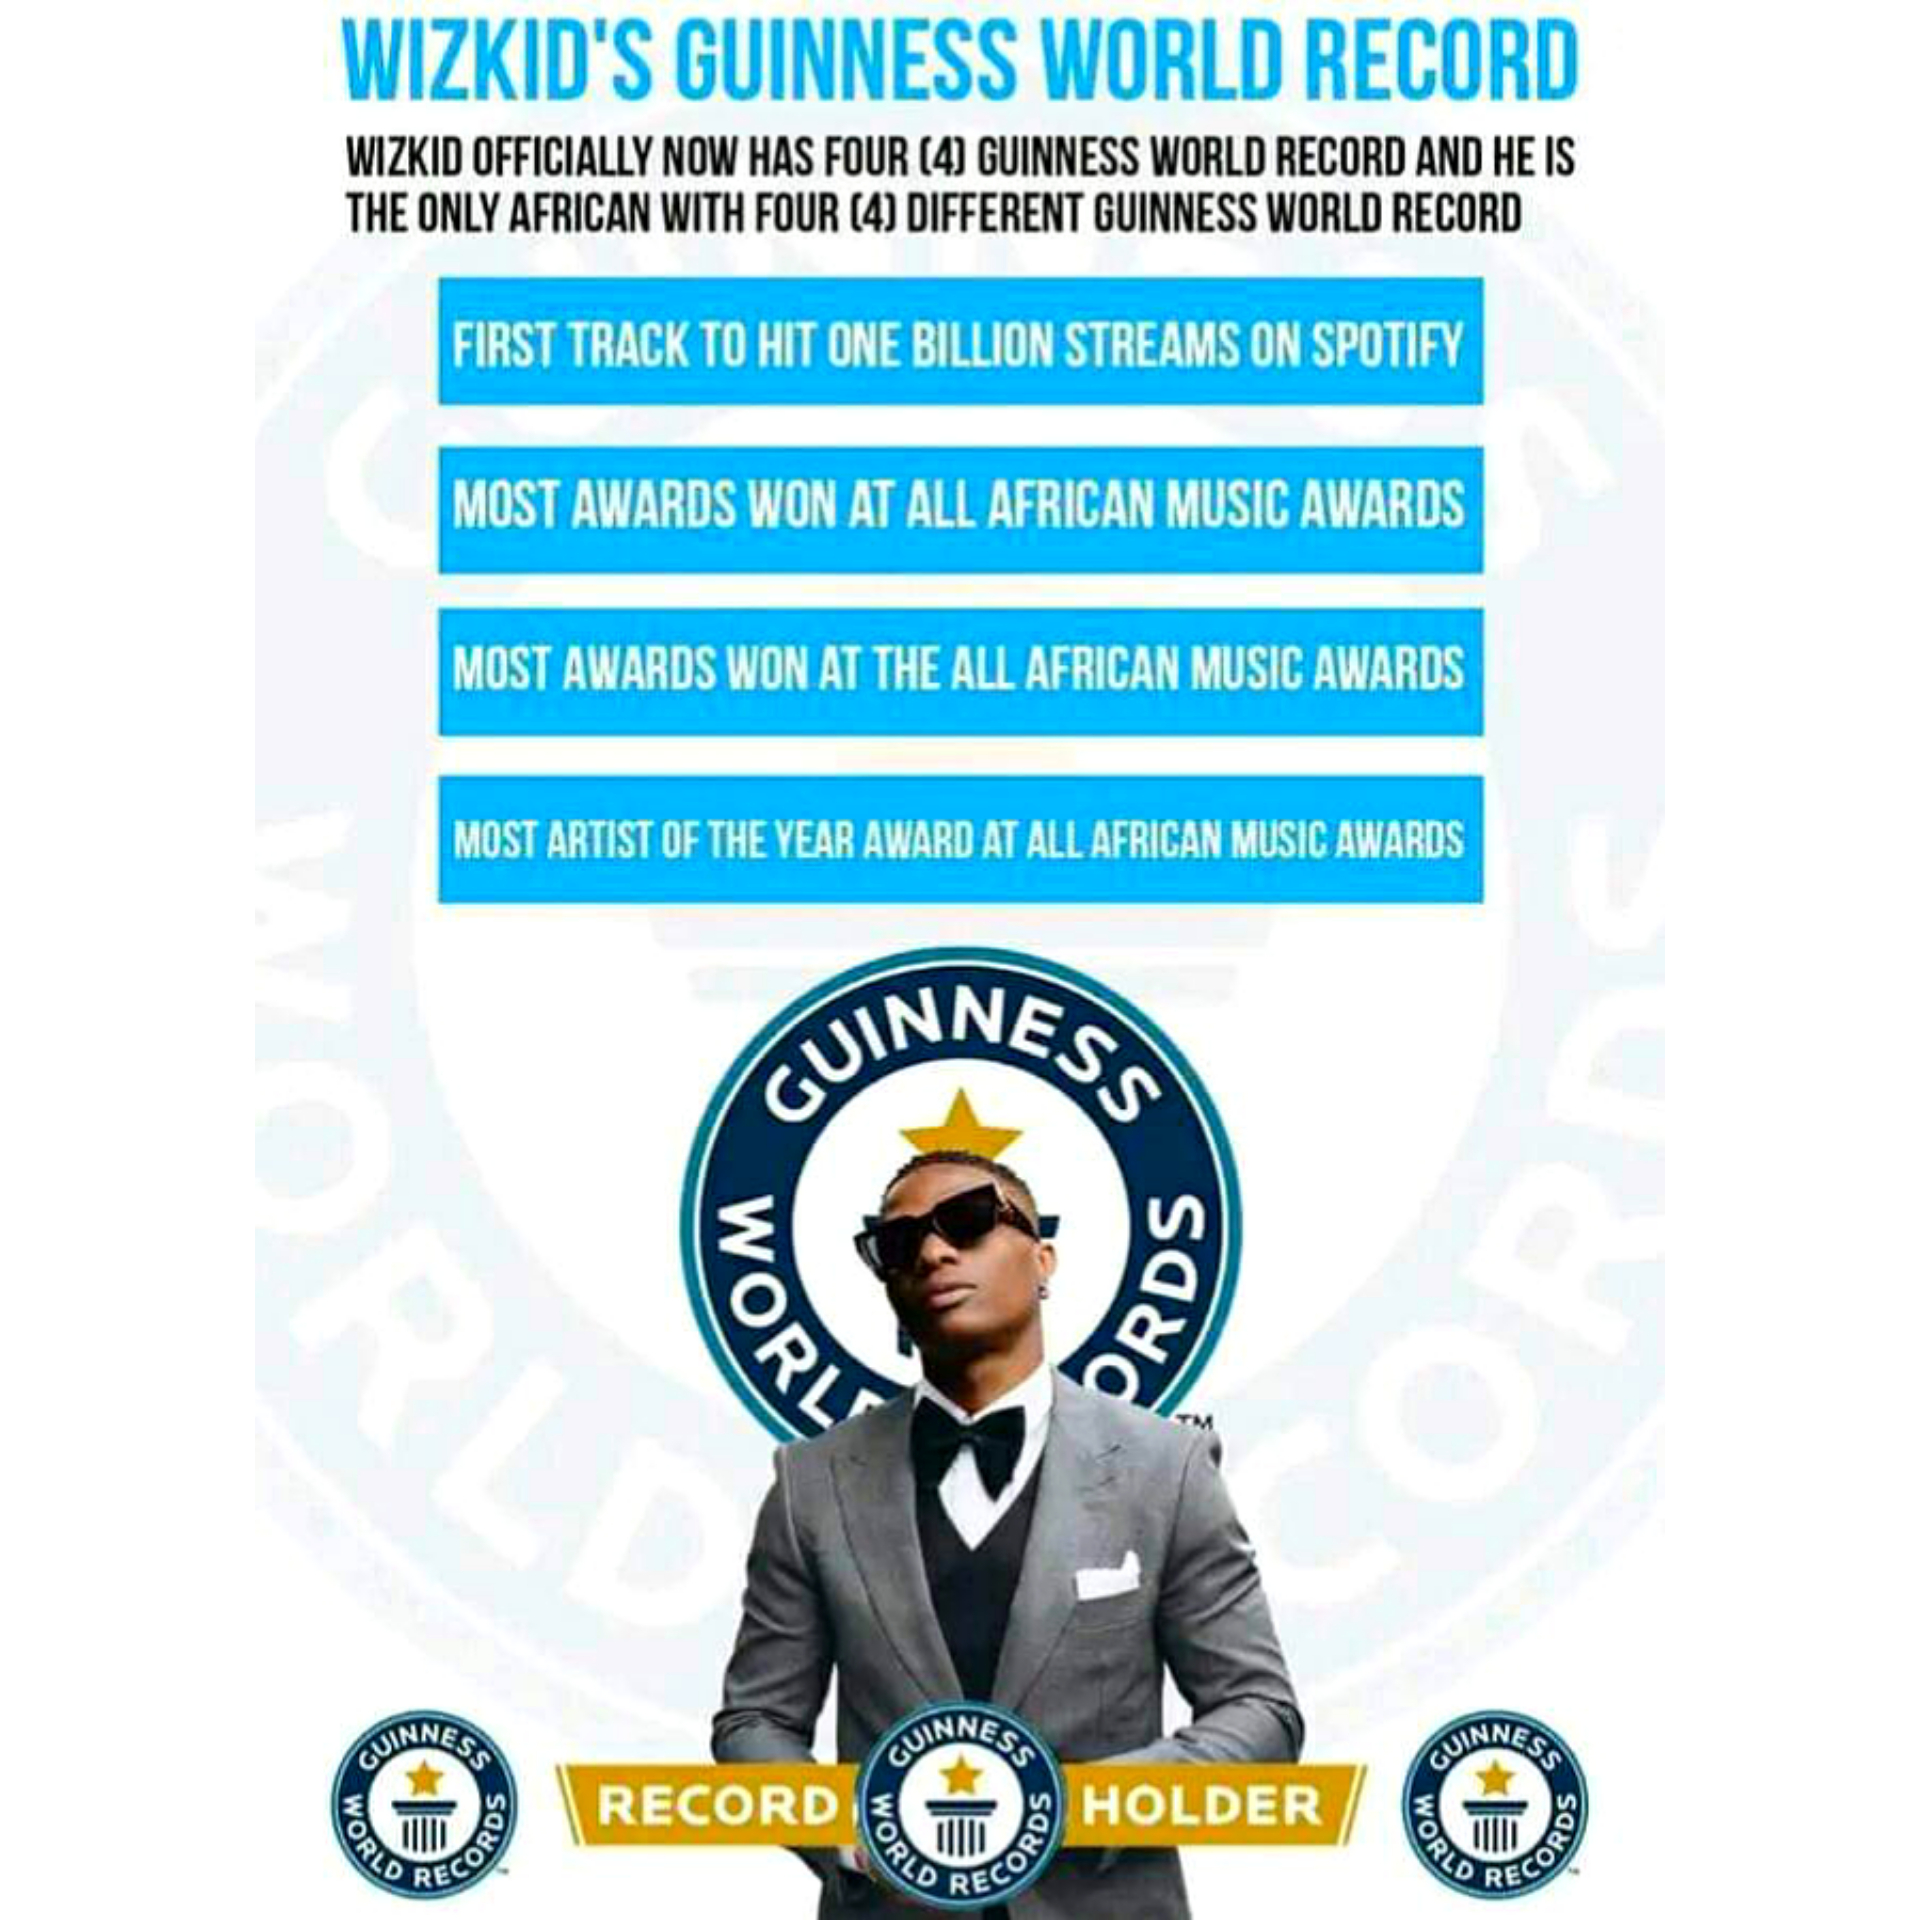 Wizkid’s Guinness World Record Wins